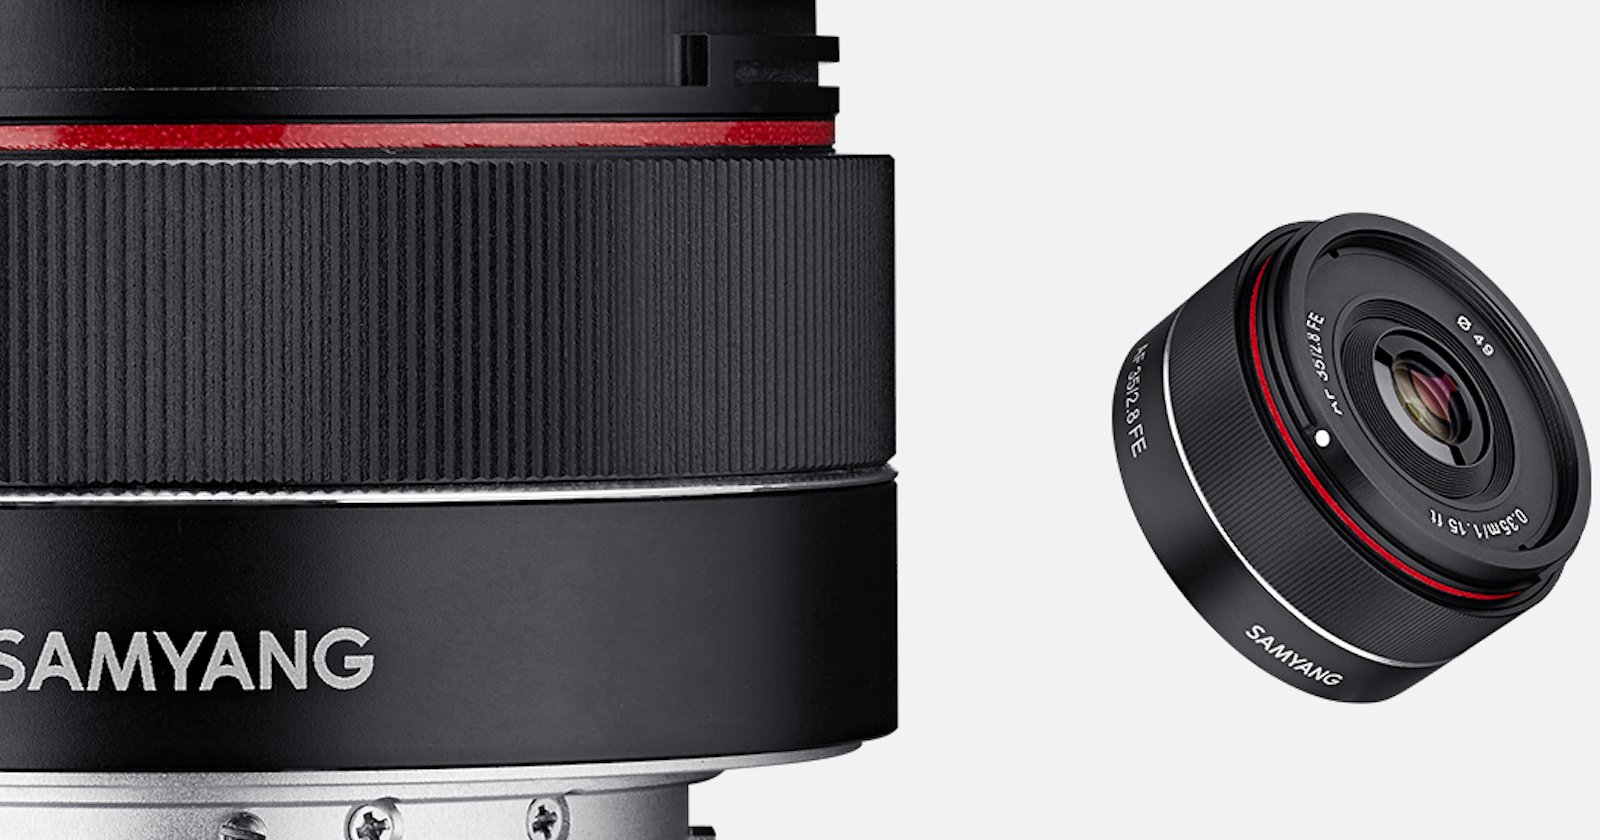  samyang unveils tiny affordable 35mm autofocus lens 